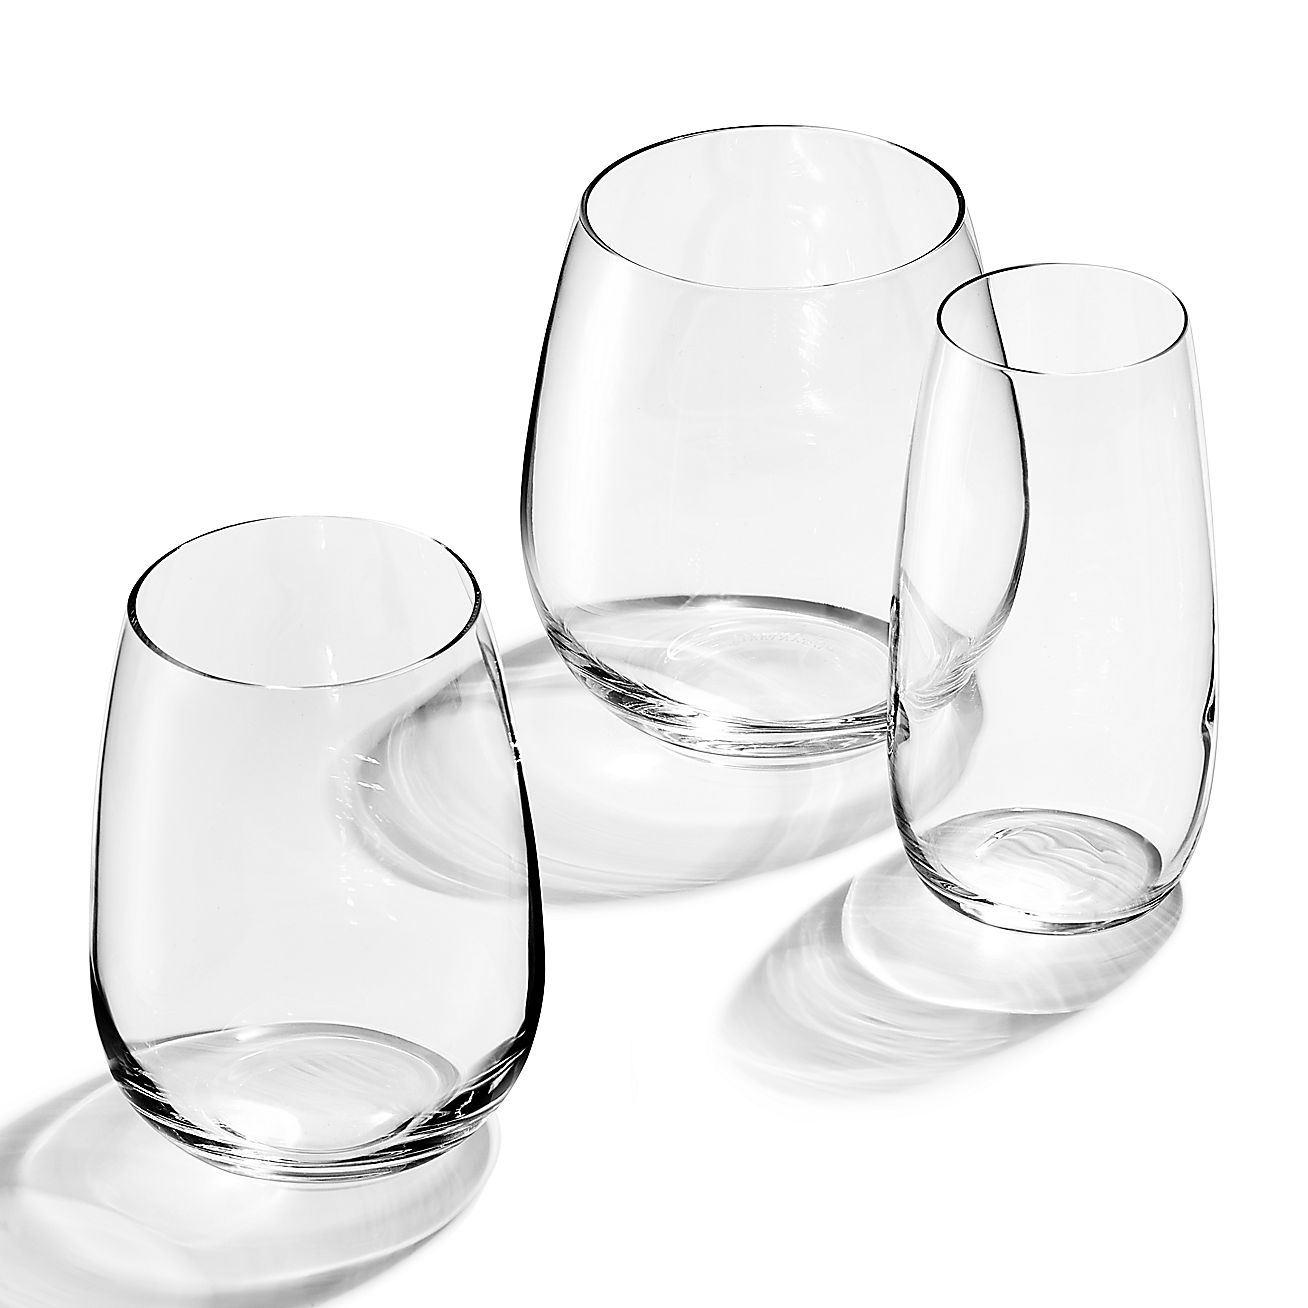 https://media.tiffany.com/is/image/Tiffany/EcomItemL2/tiffany-home-essentialsstemless-white-wine-glasses-72333144_1048386_AV_2.jpg?&op_usm=2.0,1.0,6.0&defaultImage=NoImageAvailableInternal&